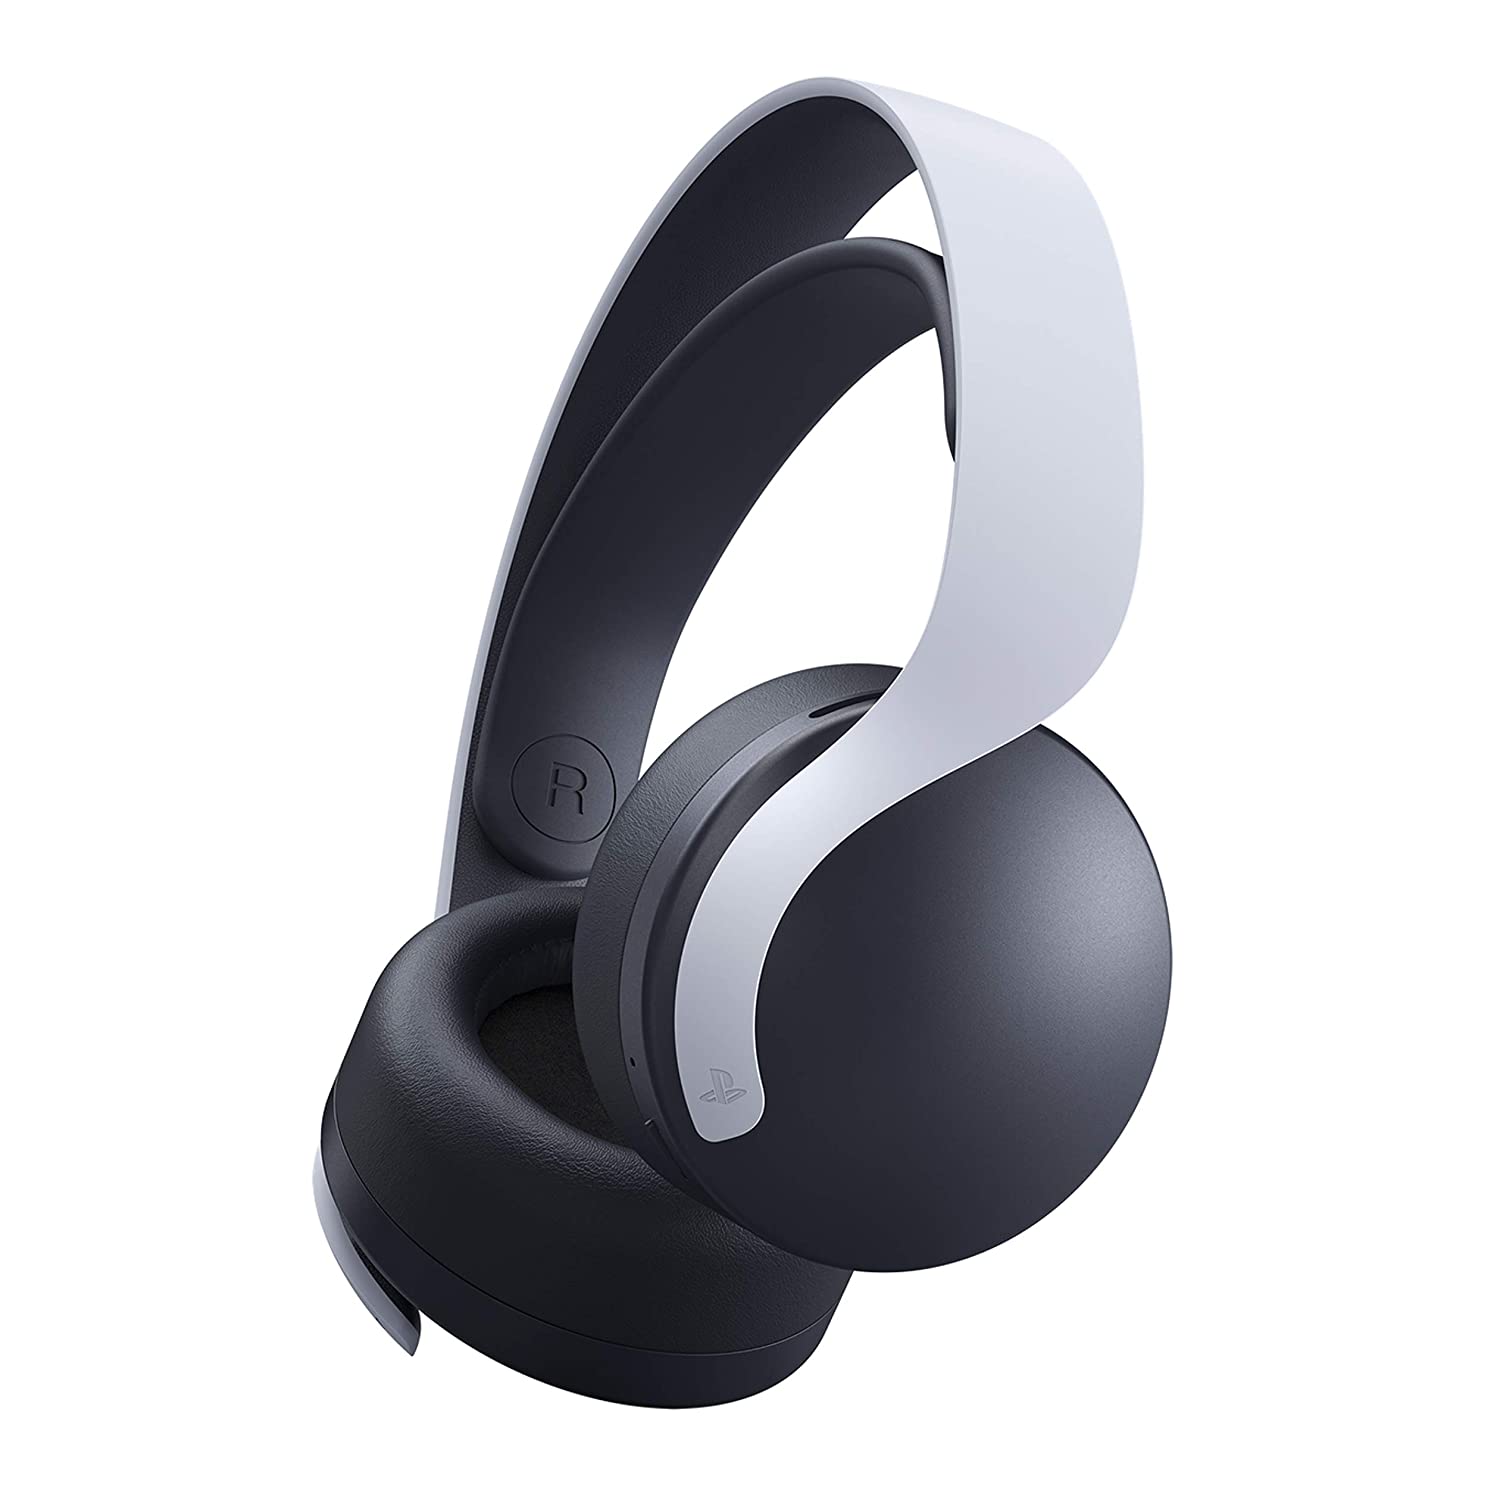 PULSE 3D-Wireless Headset - PlayStation 5